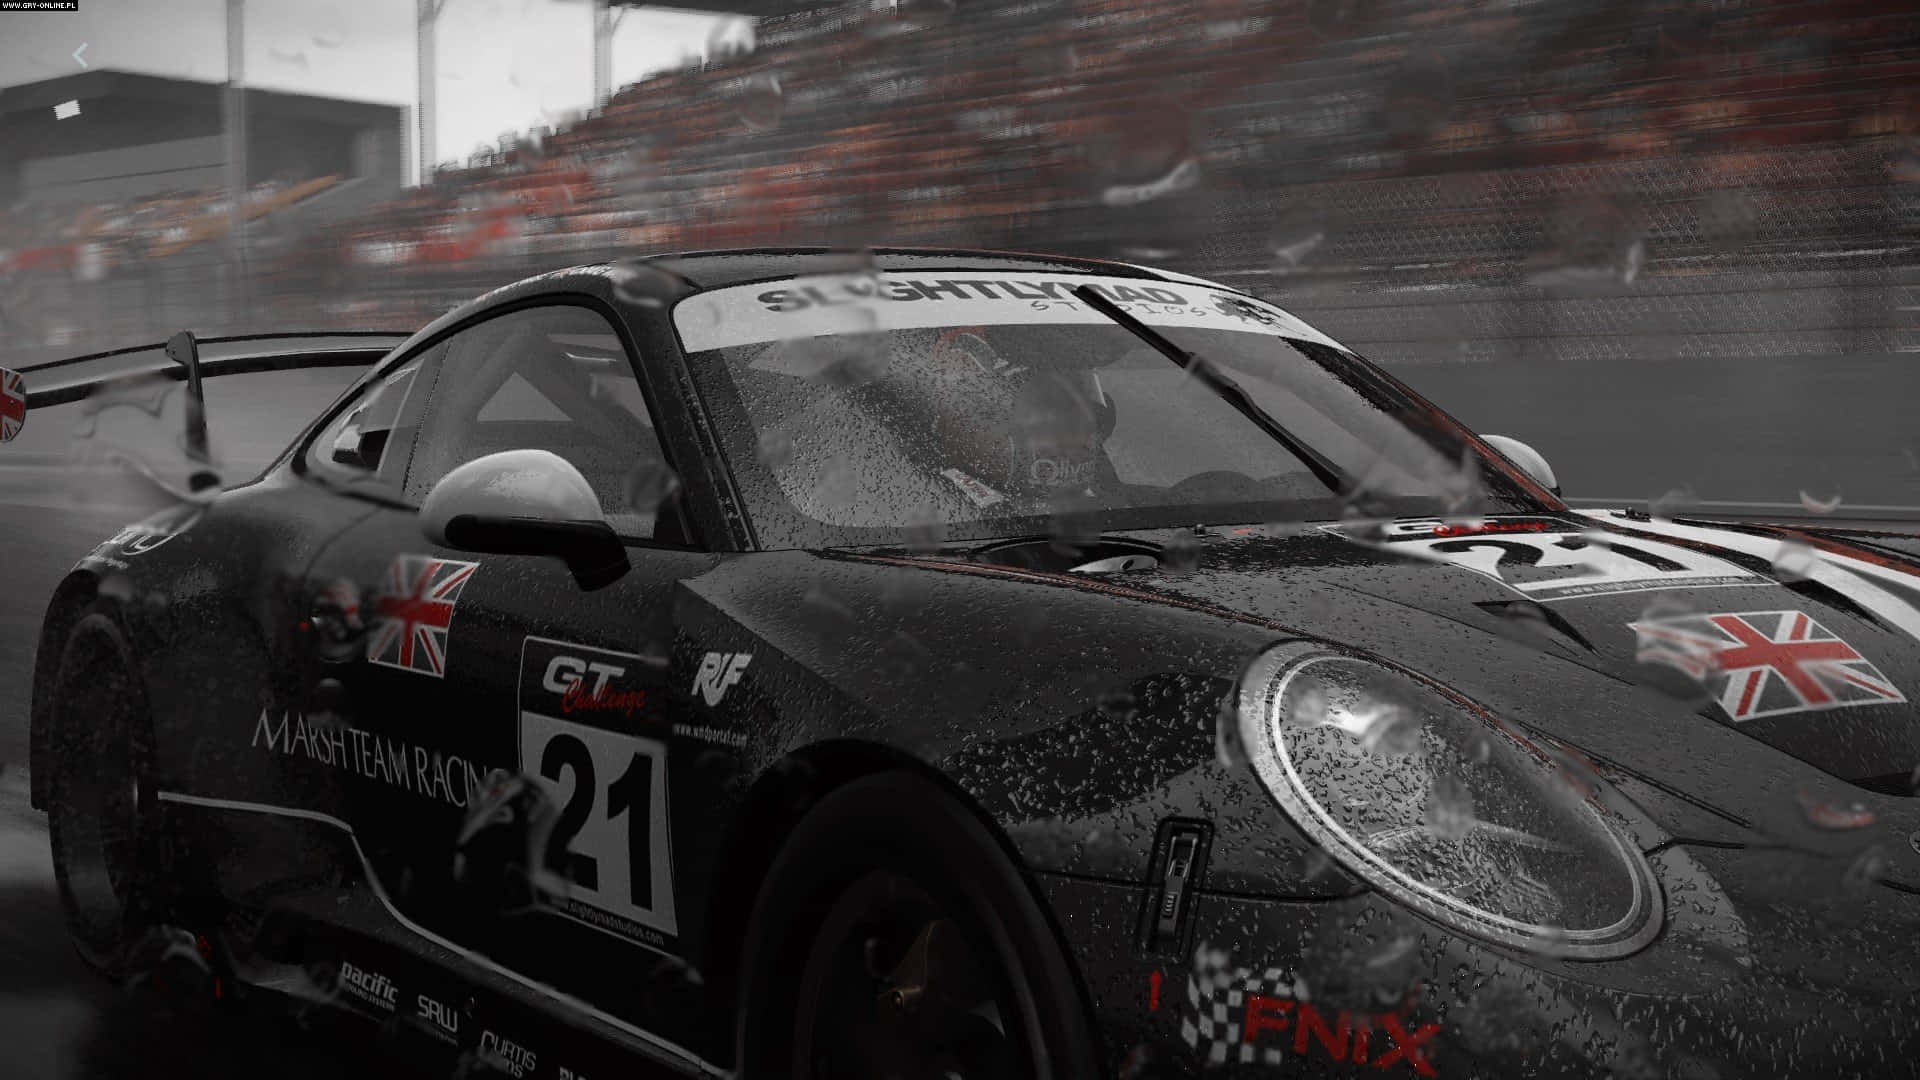 A Porsche Gt3 Racing Car Is Shown In The Rain